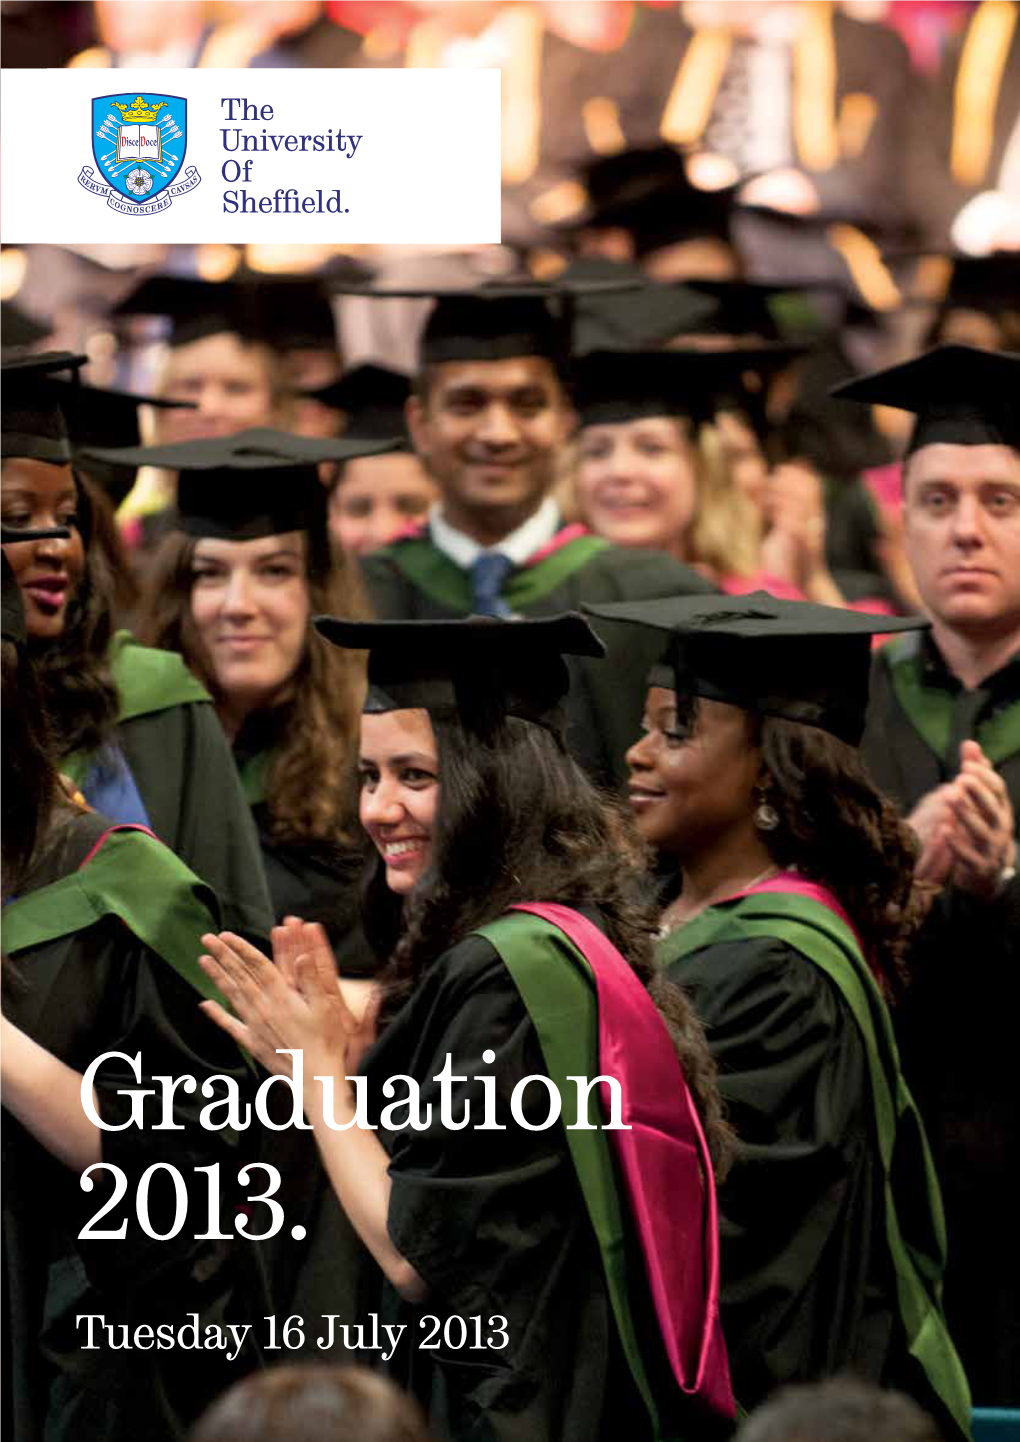 Graduation 2013. Tuesday 16 July 2013 the University of Sheffield